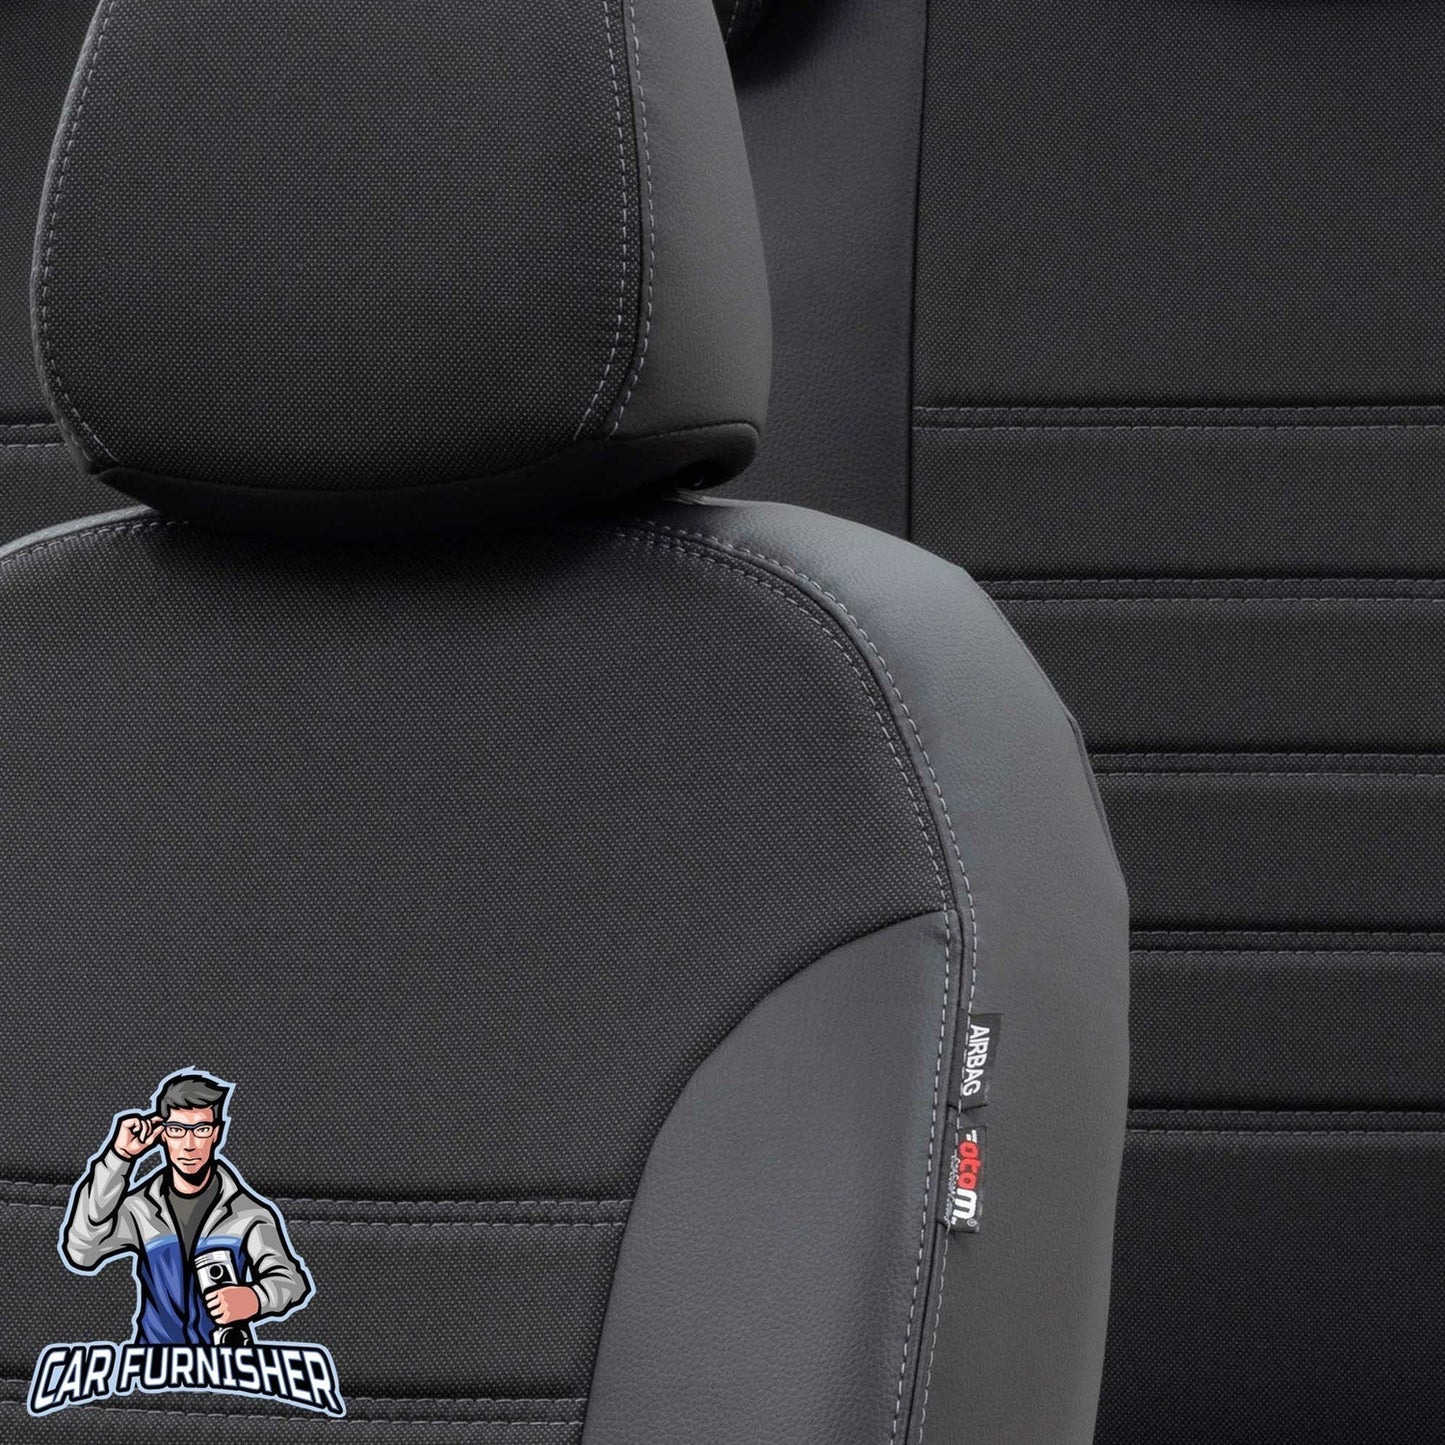 Dacia Sandero Seat Covers Paris Leather & Jacquard Design Black Leather & Jacquard Fabric